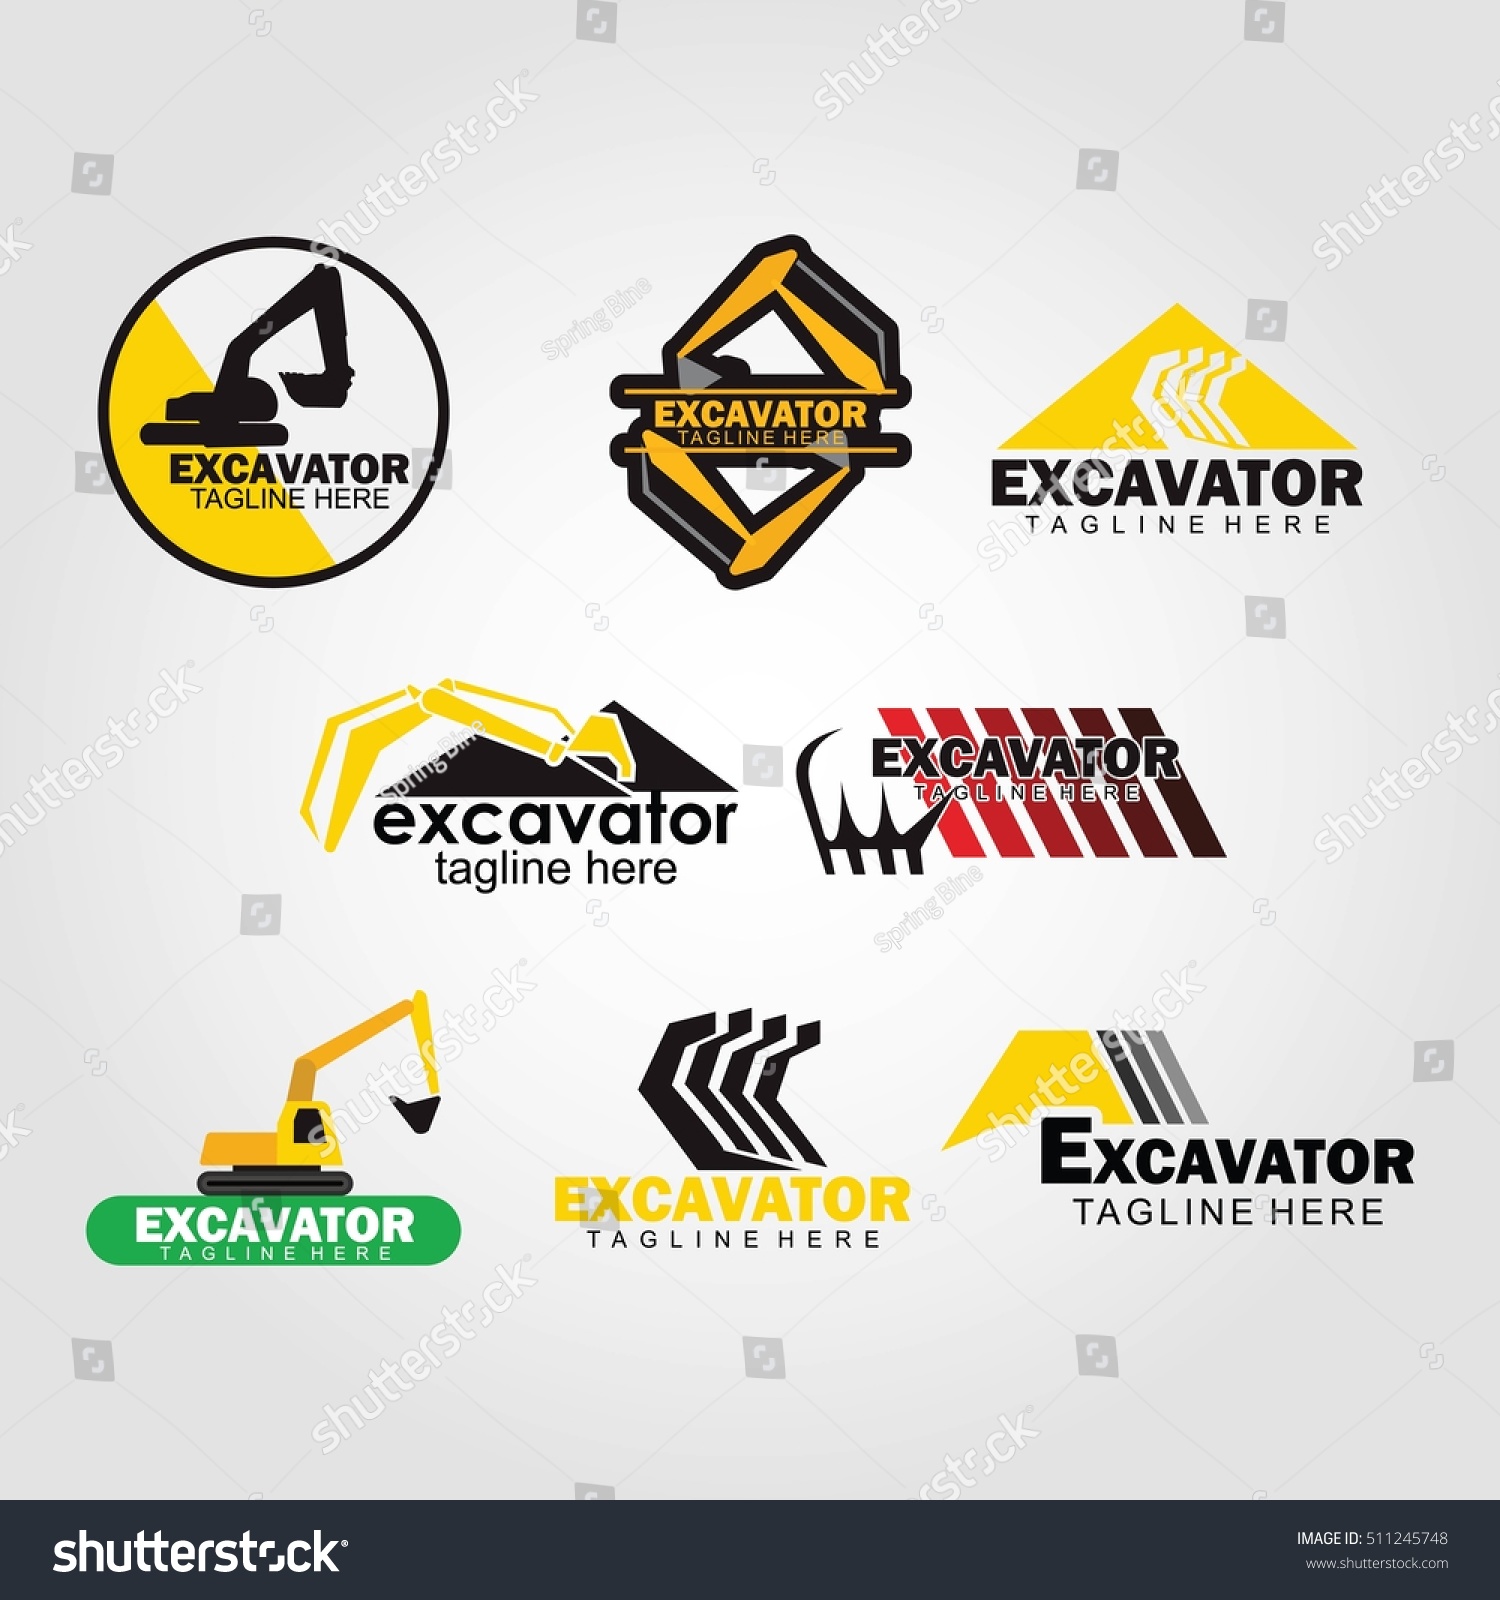 Download Excavator Logo Design Template Vector Illustration Stock ...